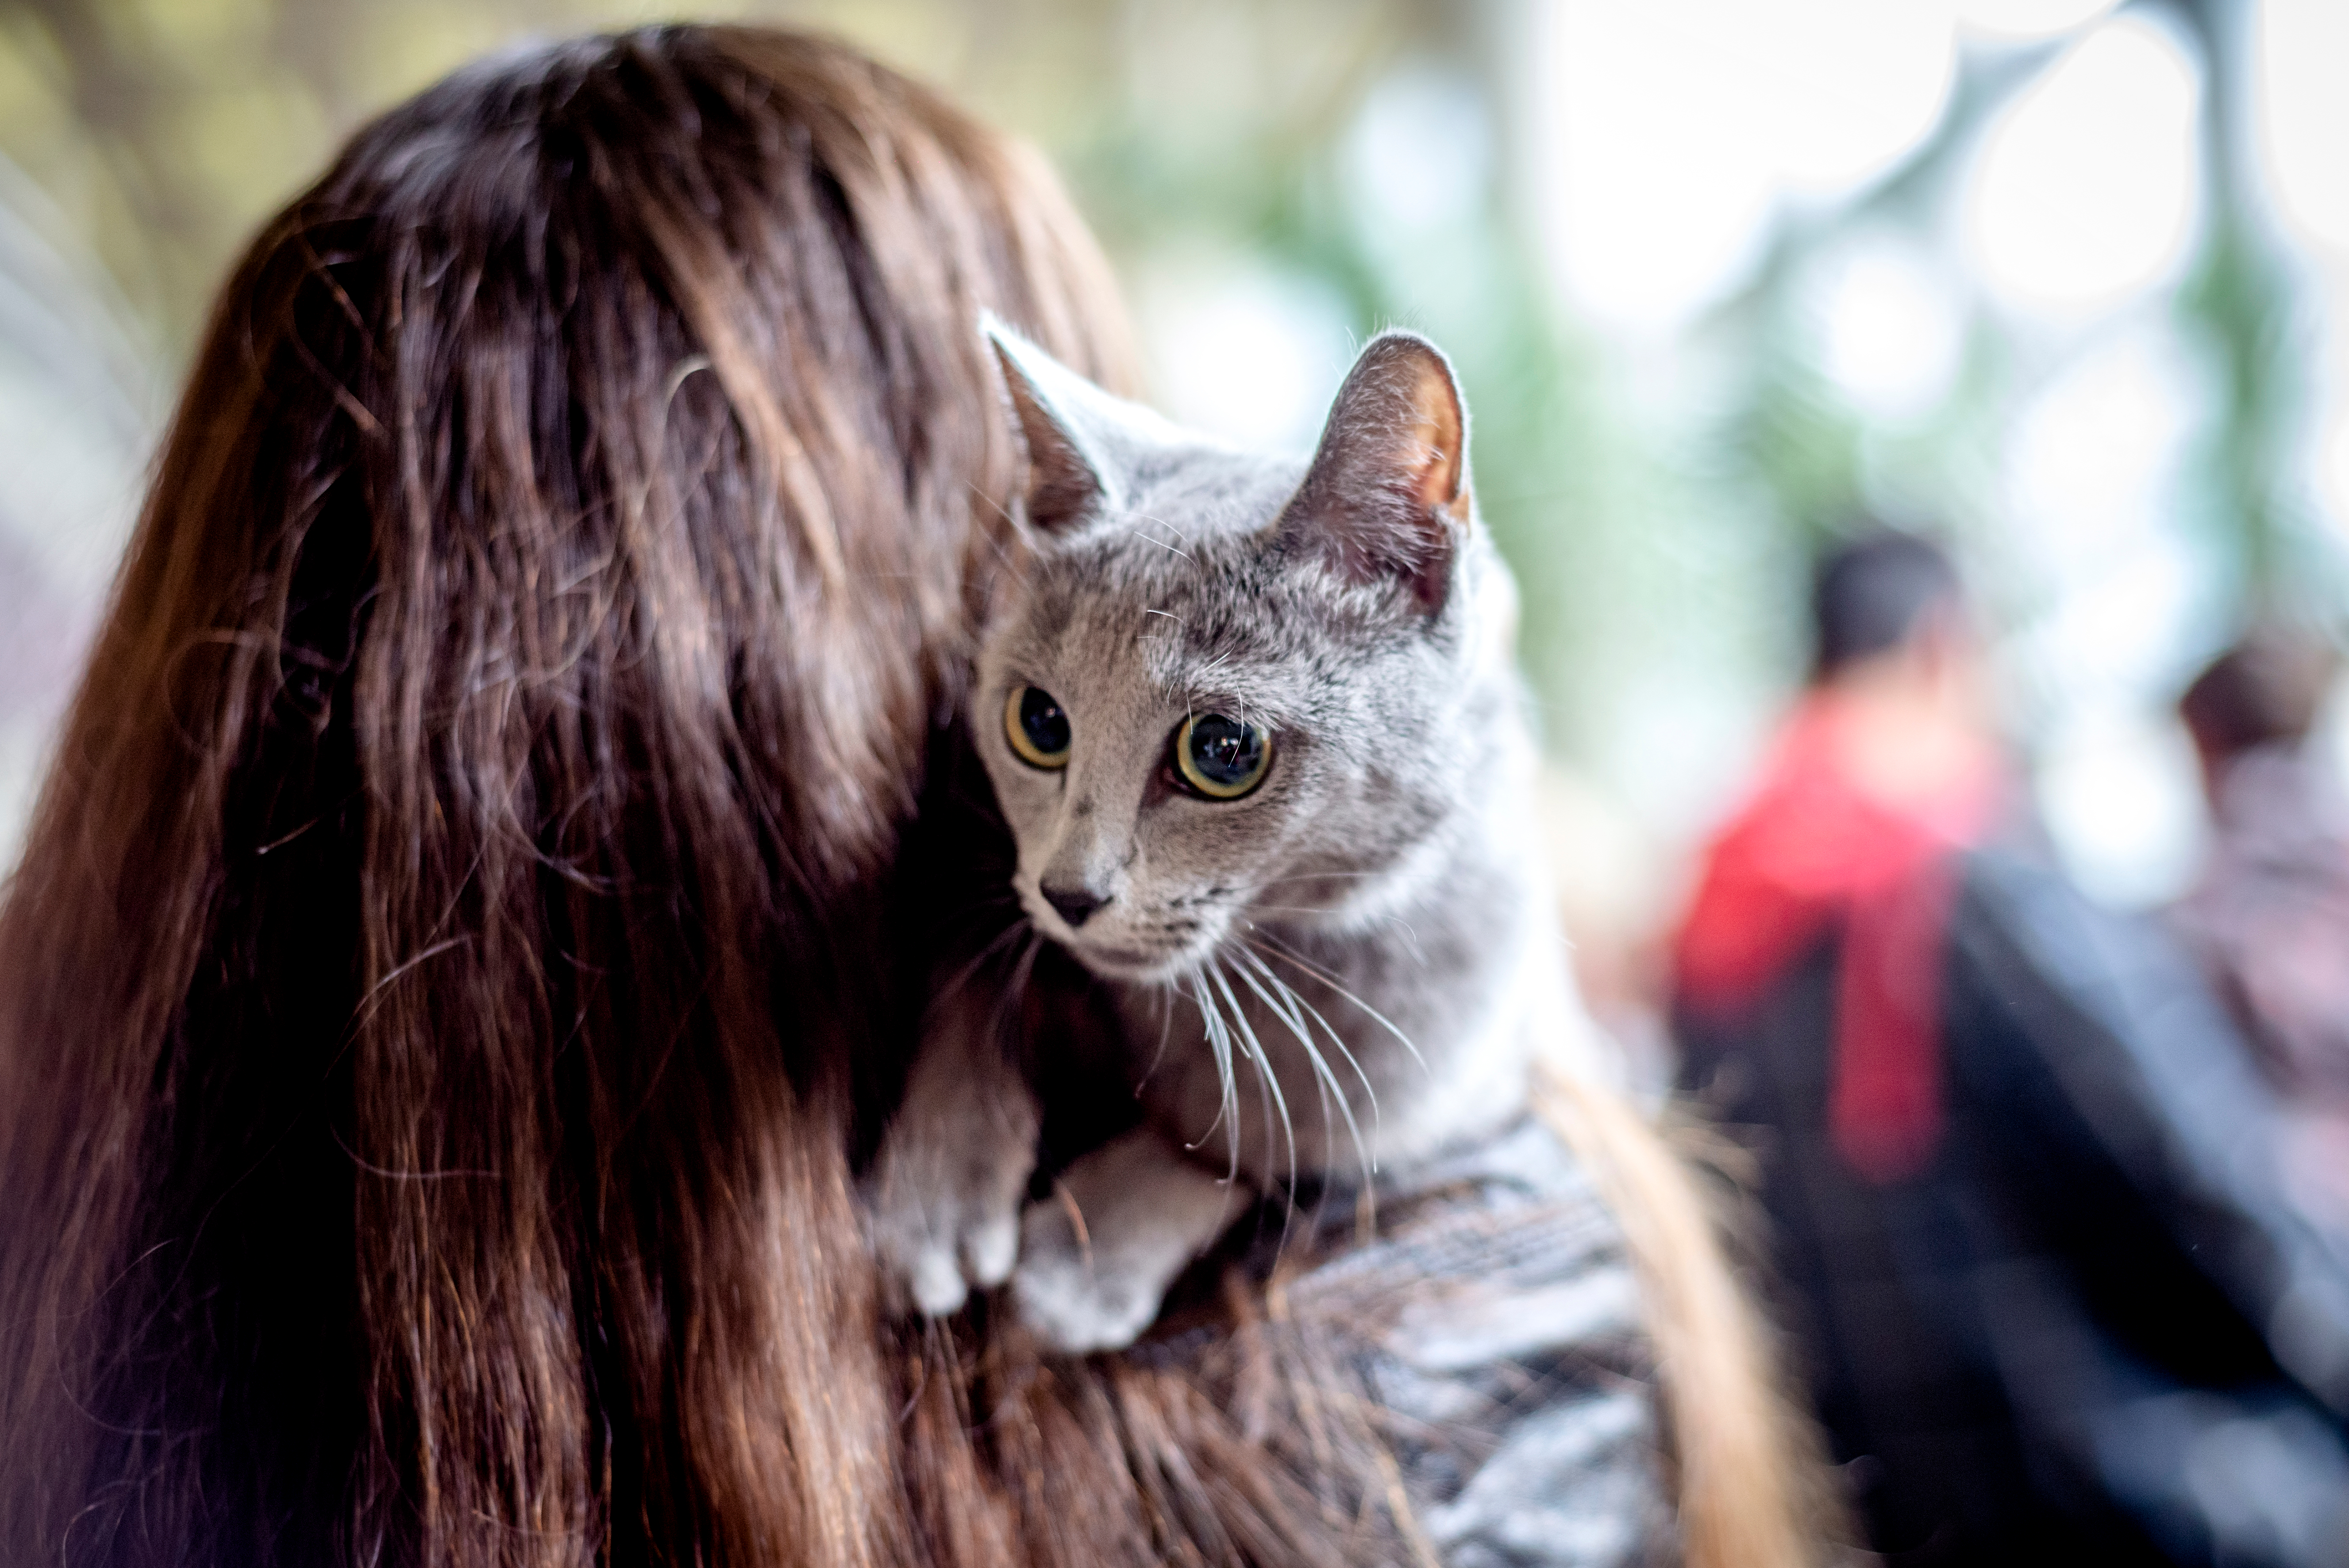 A girl carrying a cat | Source: Shutterstock